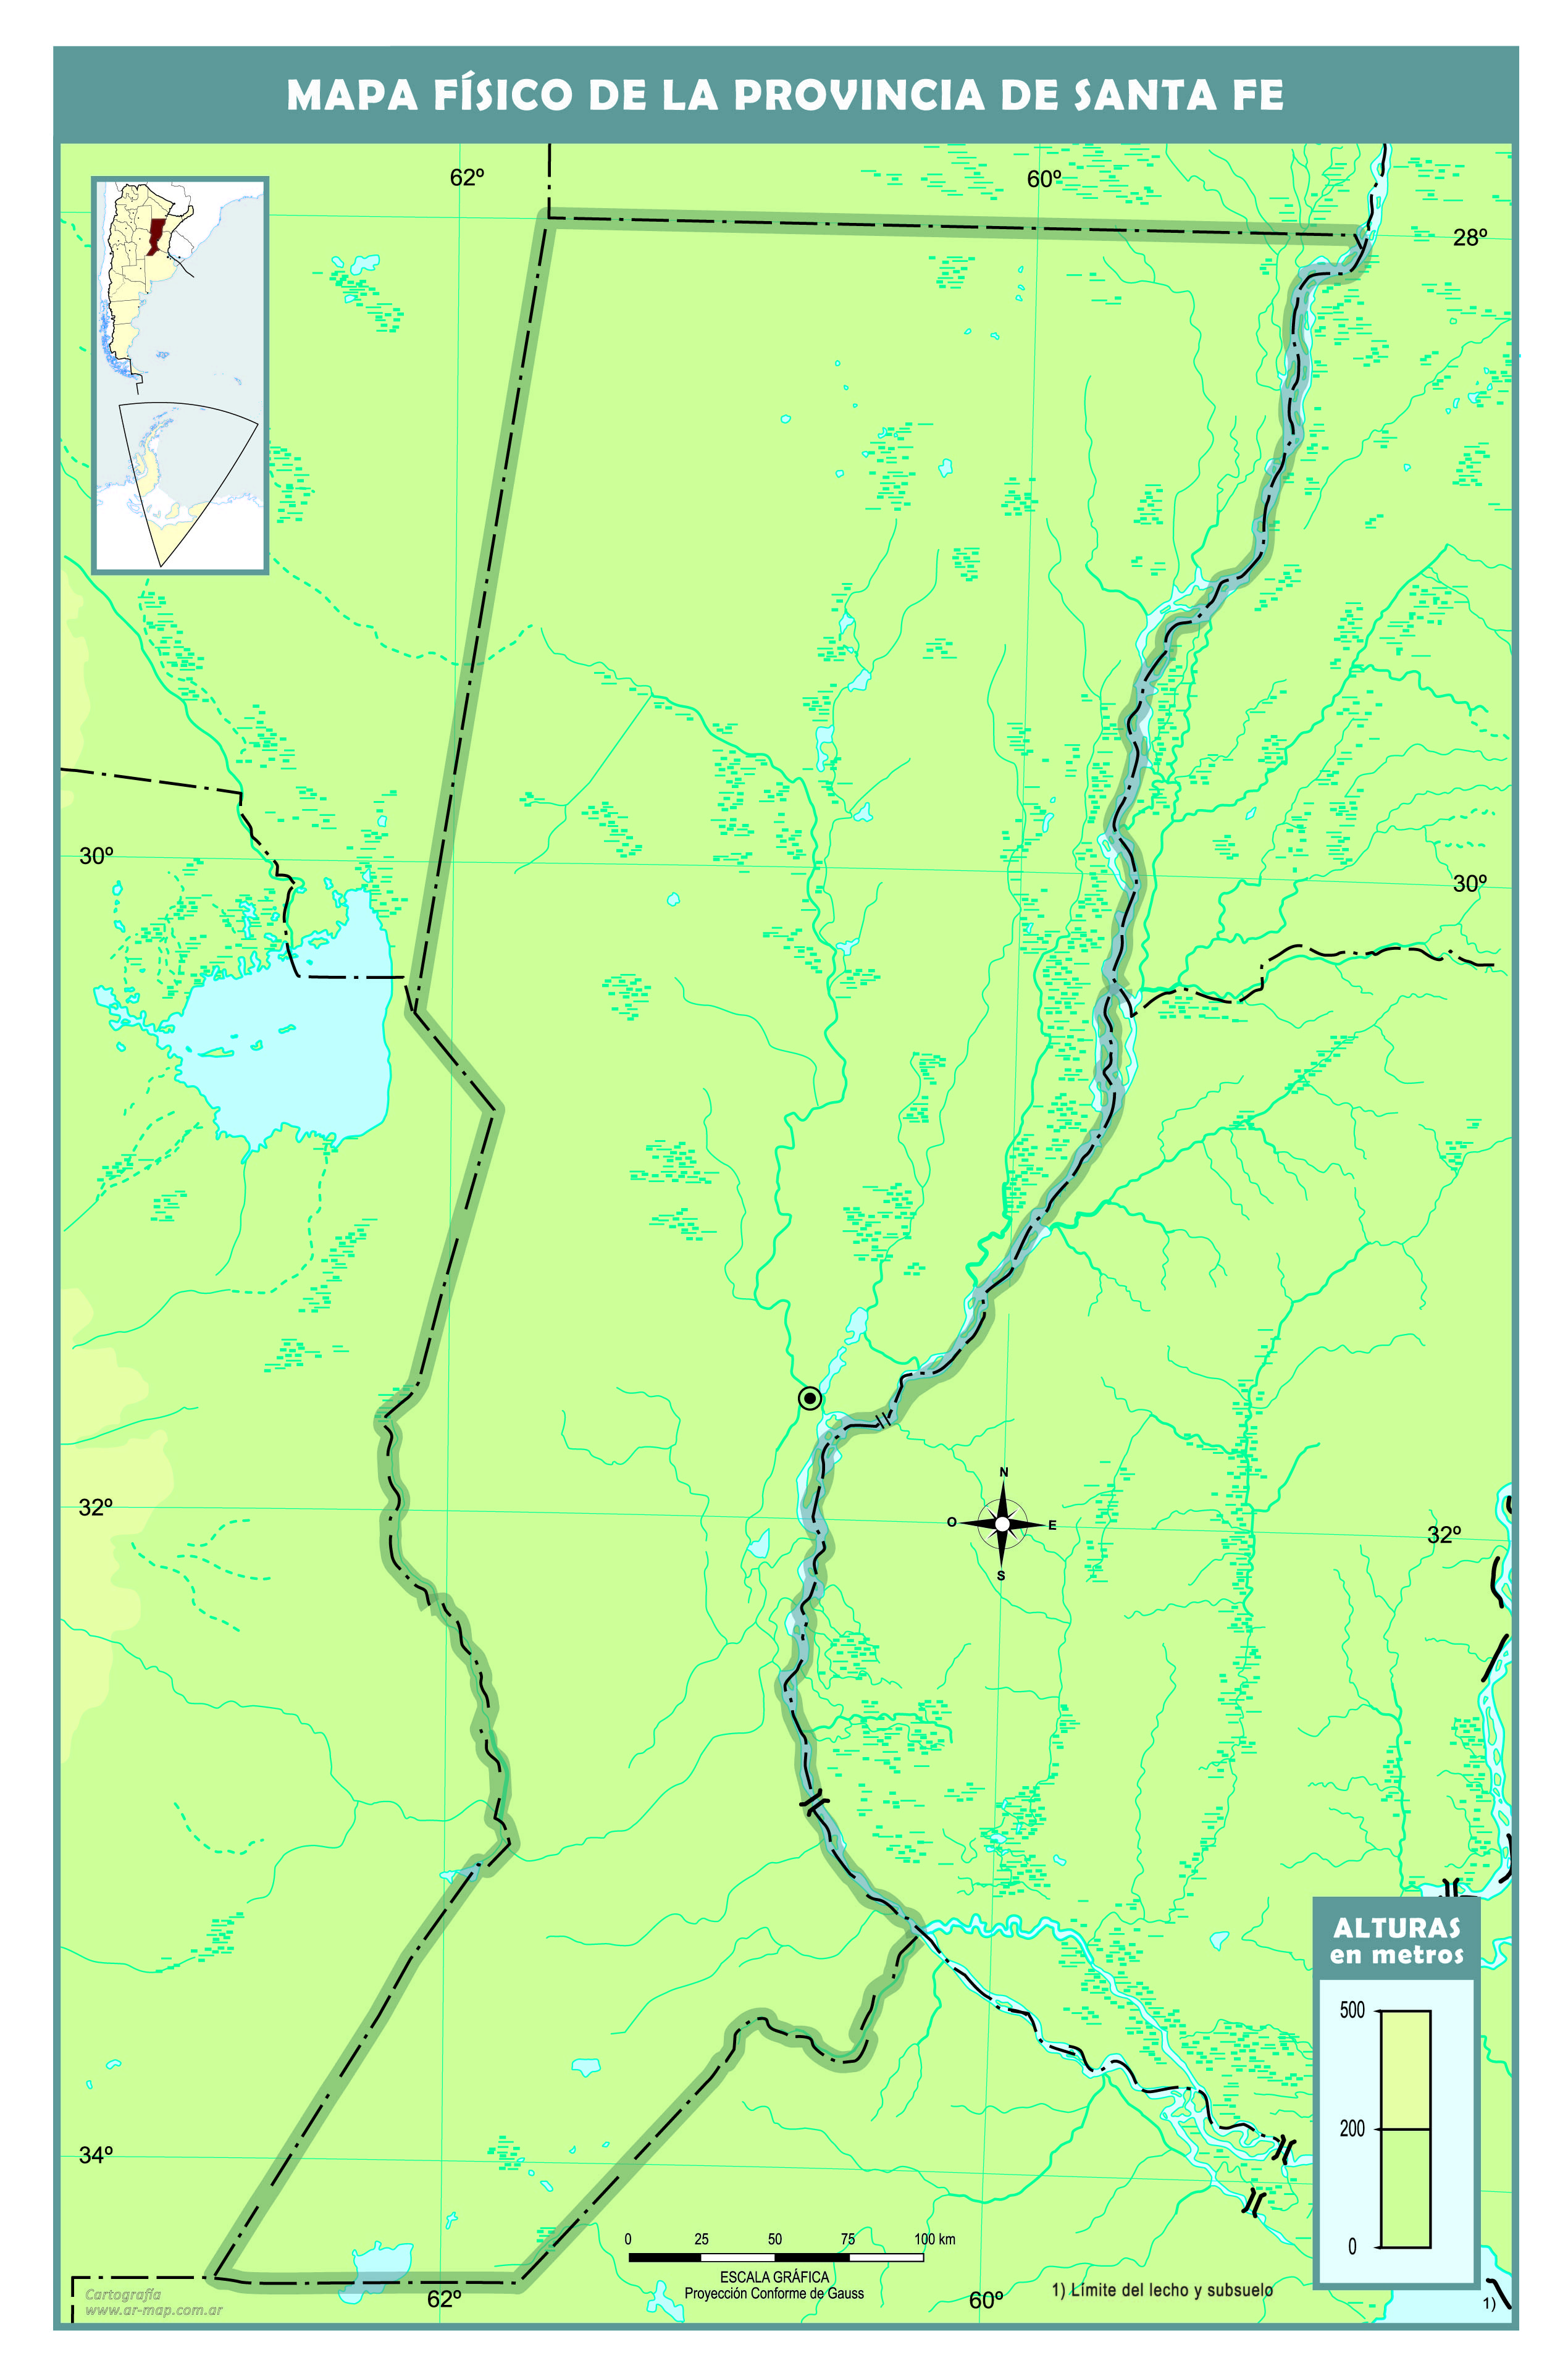 Mapa físico mudo de la provincia de Santa Fe